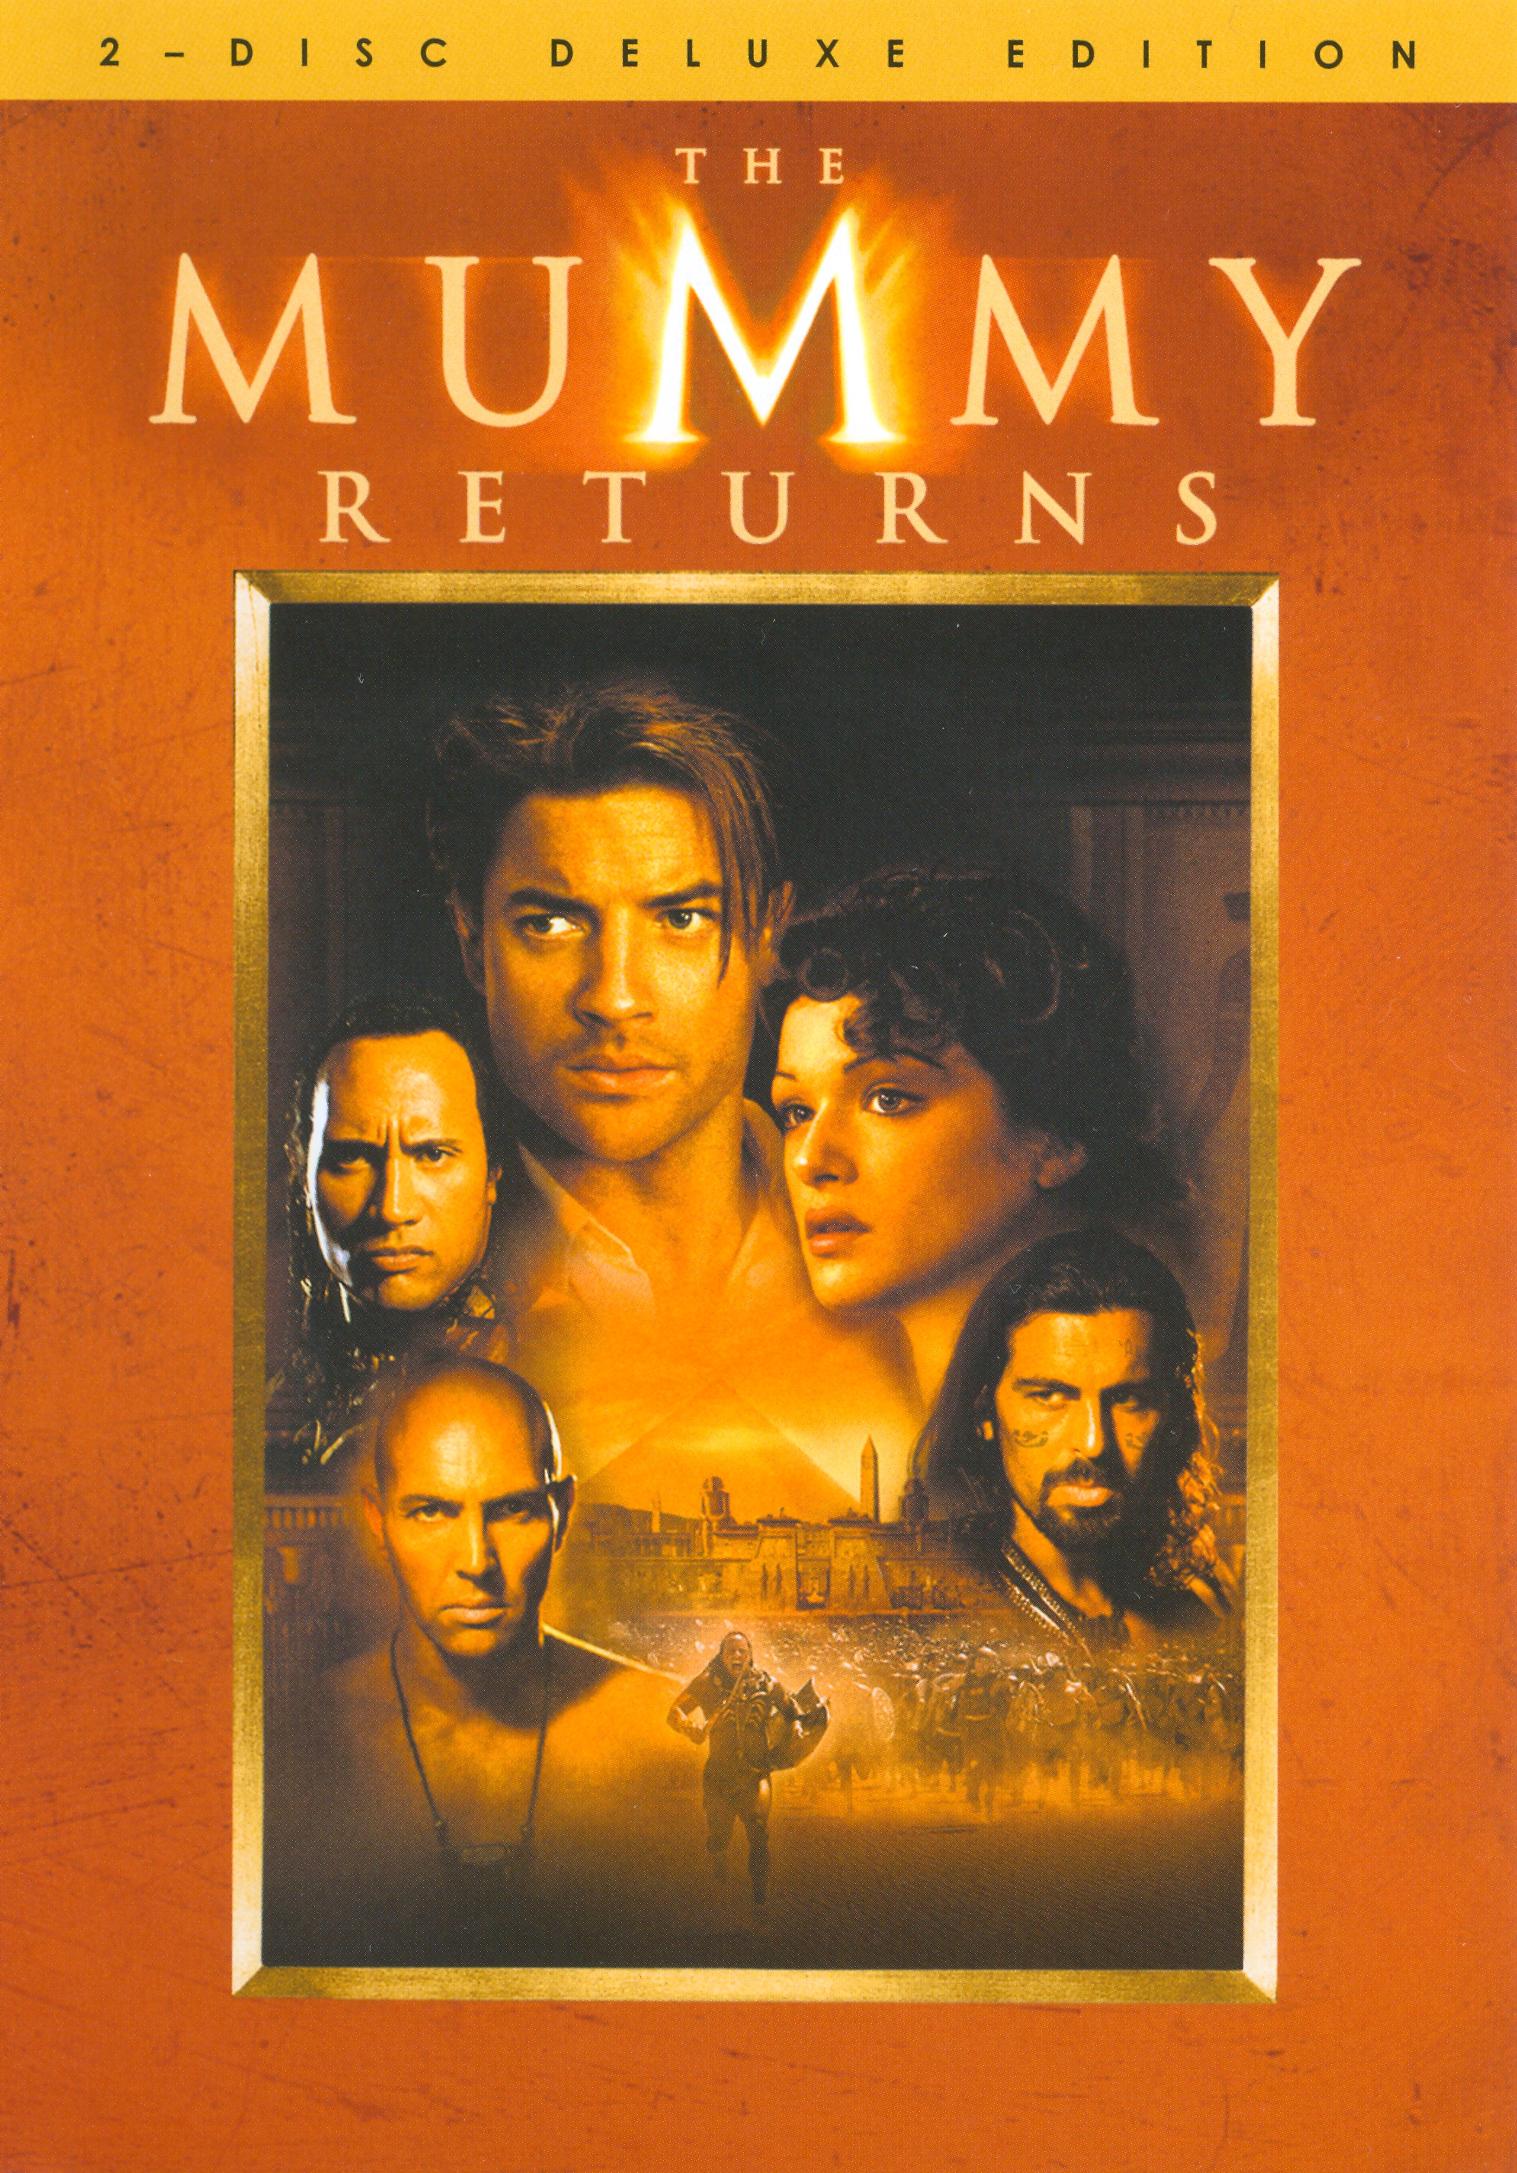 The Mummy Returns [WS] [2 Discs] [Deluxe Edition] [DVD] [2001] - Best Buy